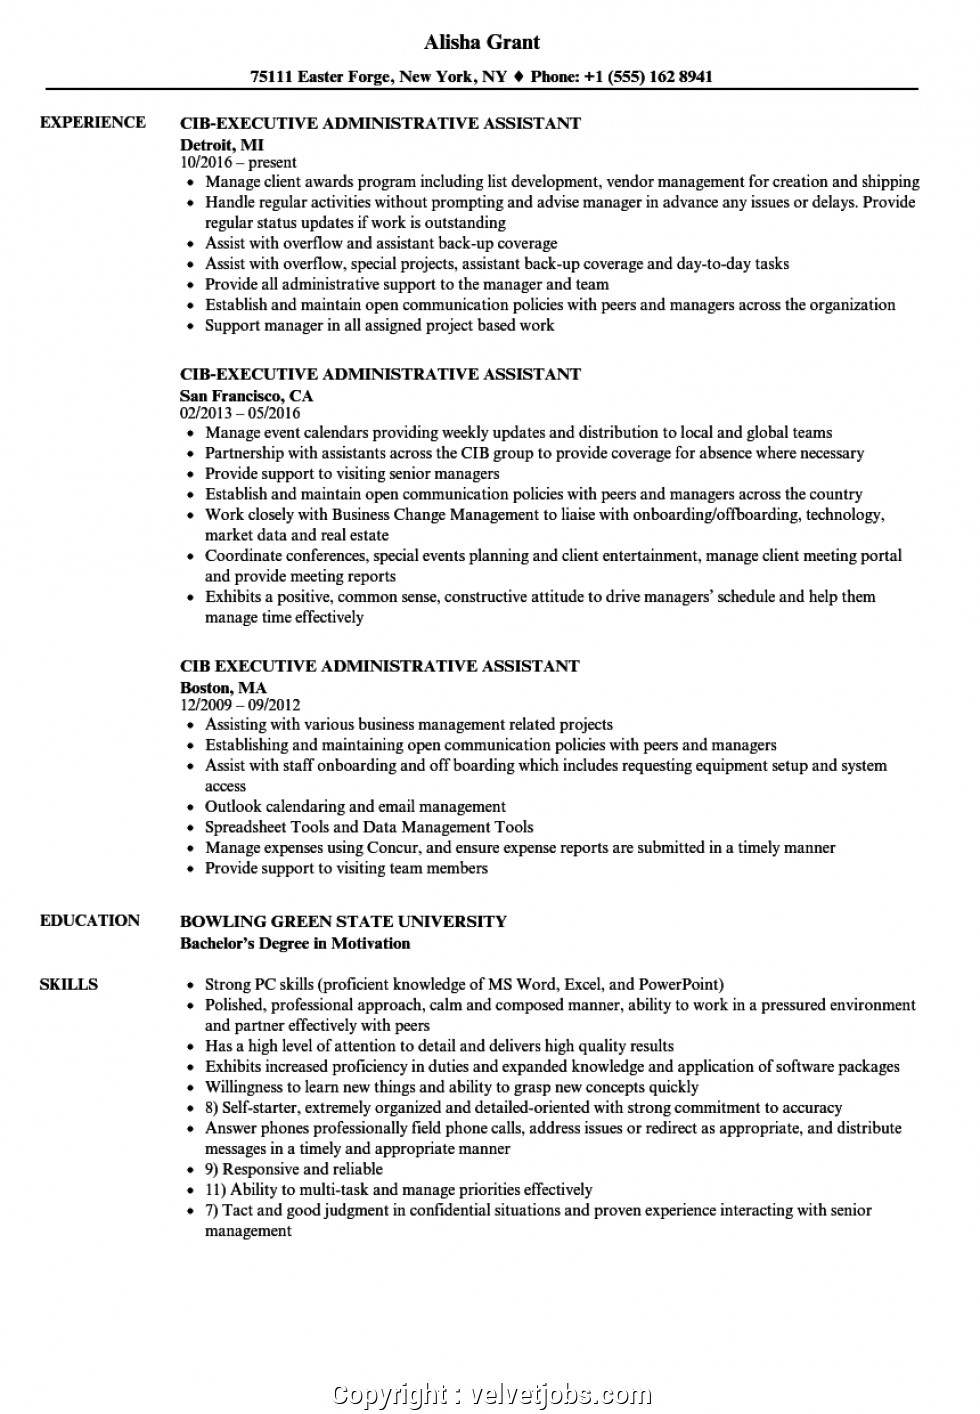 professional executive administrative assistant resume sample